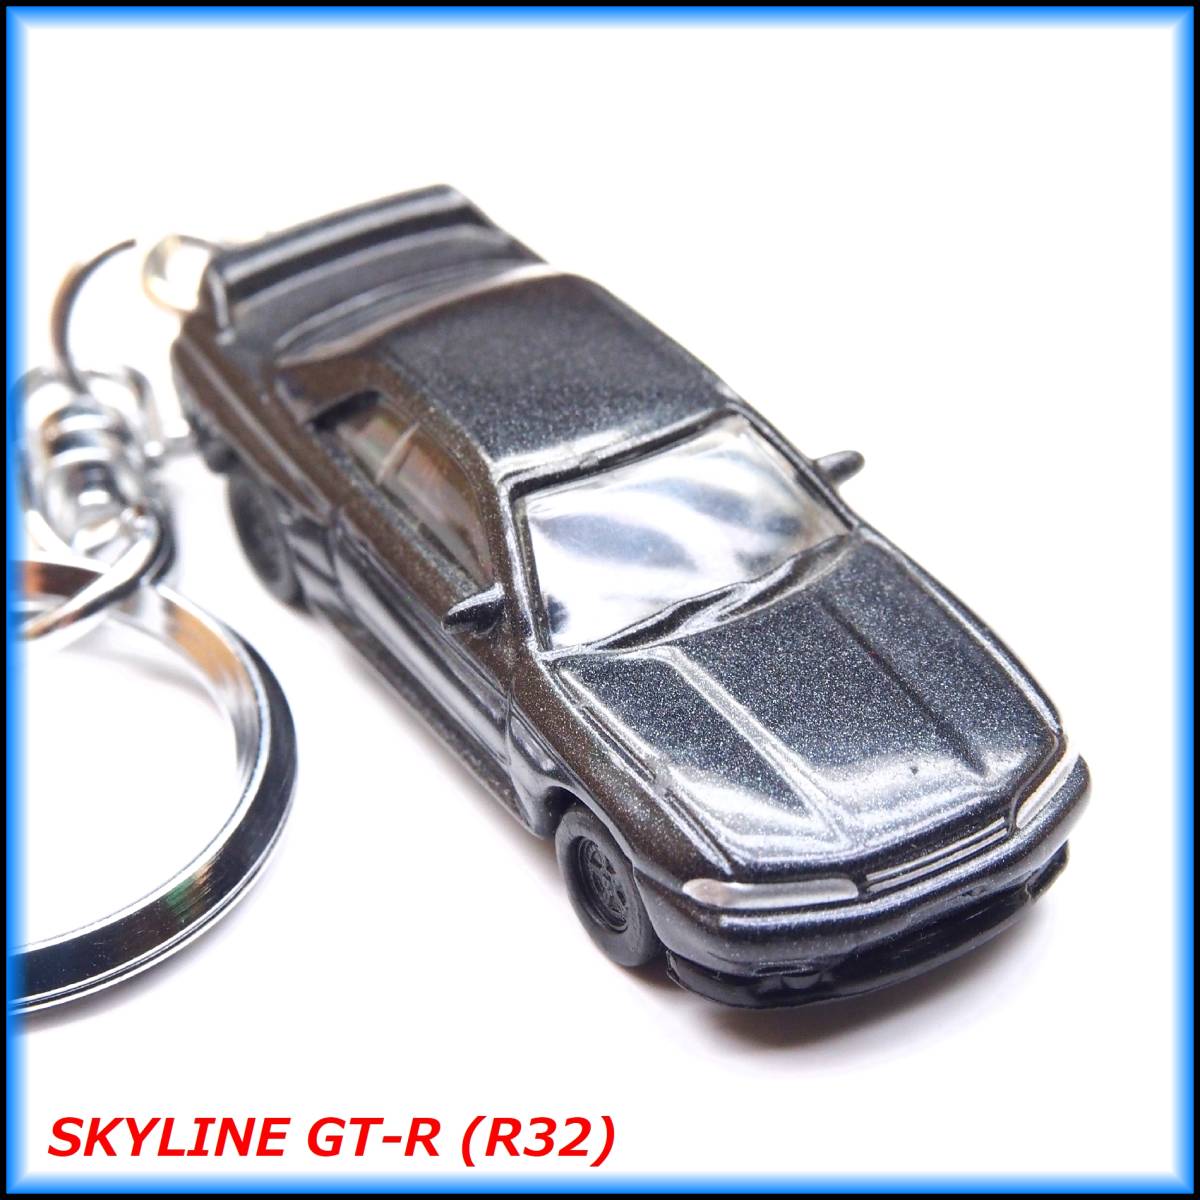 Yahoo!オークション - 日産 スカイライン GT-R R32 ミニカー ストラップ